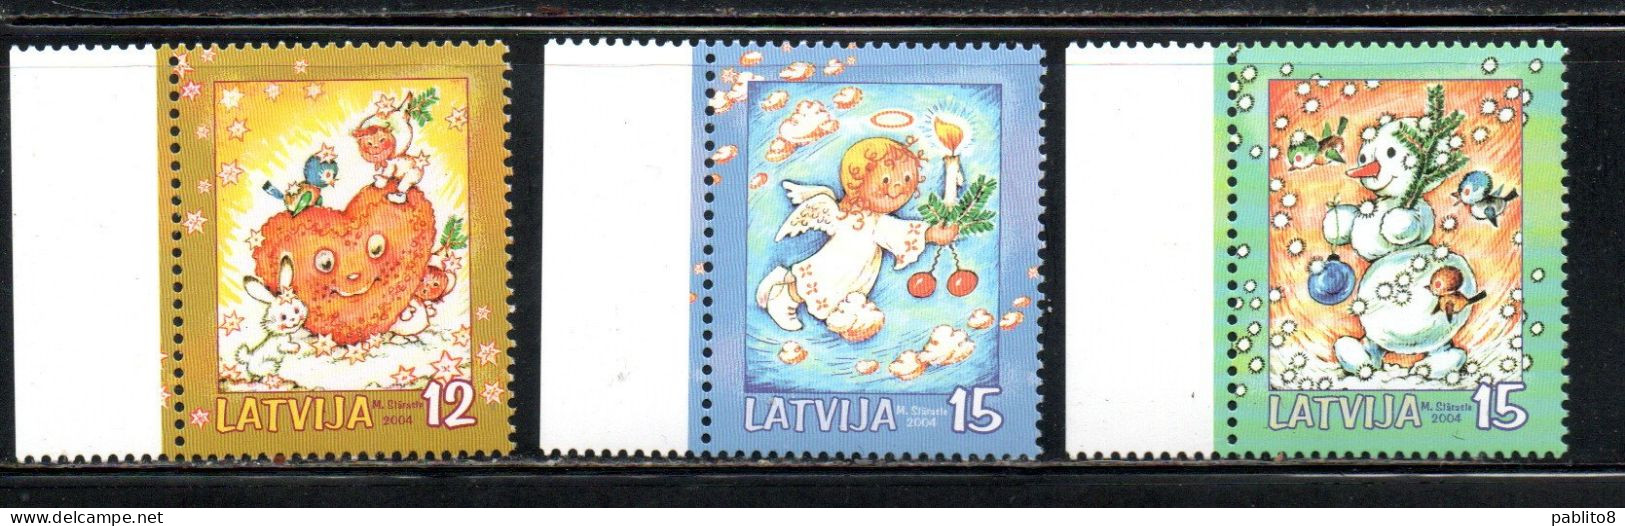 LATVIA LETTLAND LETTONIA LATVIJA 2004 CHRISTMAS NATALE NOEL WEIHNACHTEN NAVIDAD COMPLETE SET SERIE COMPLETA MNH - Latvia